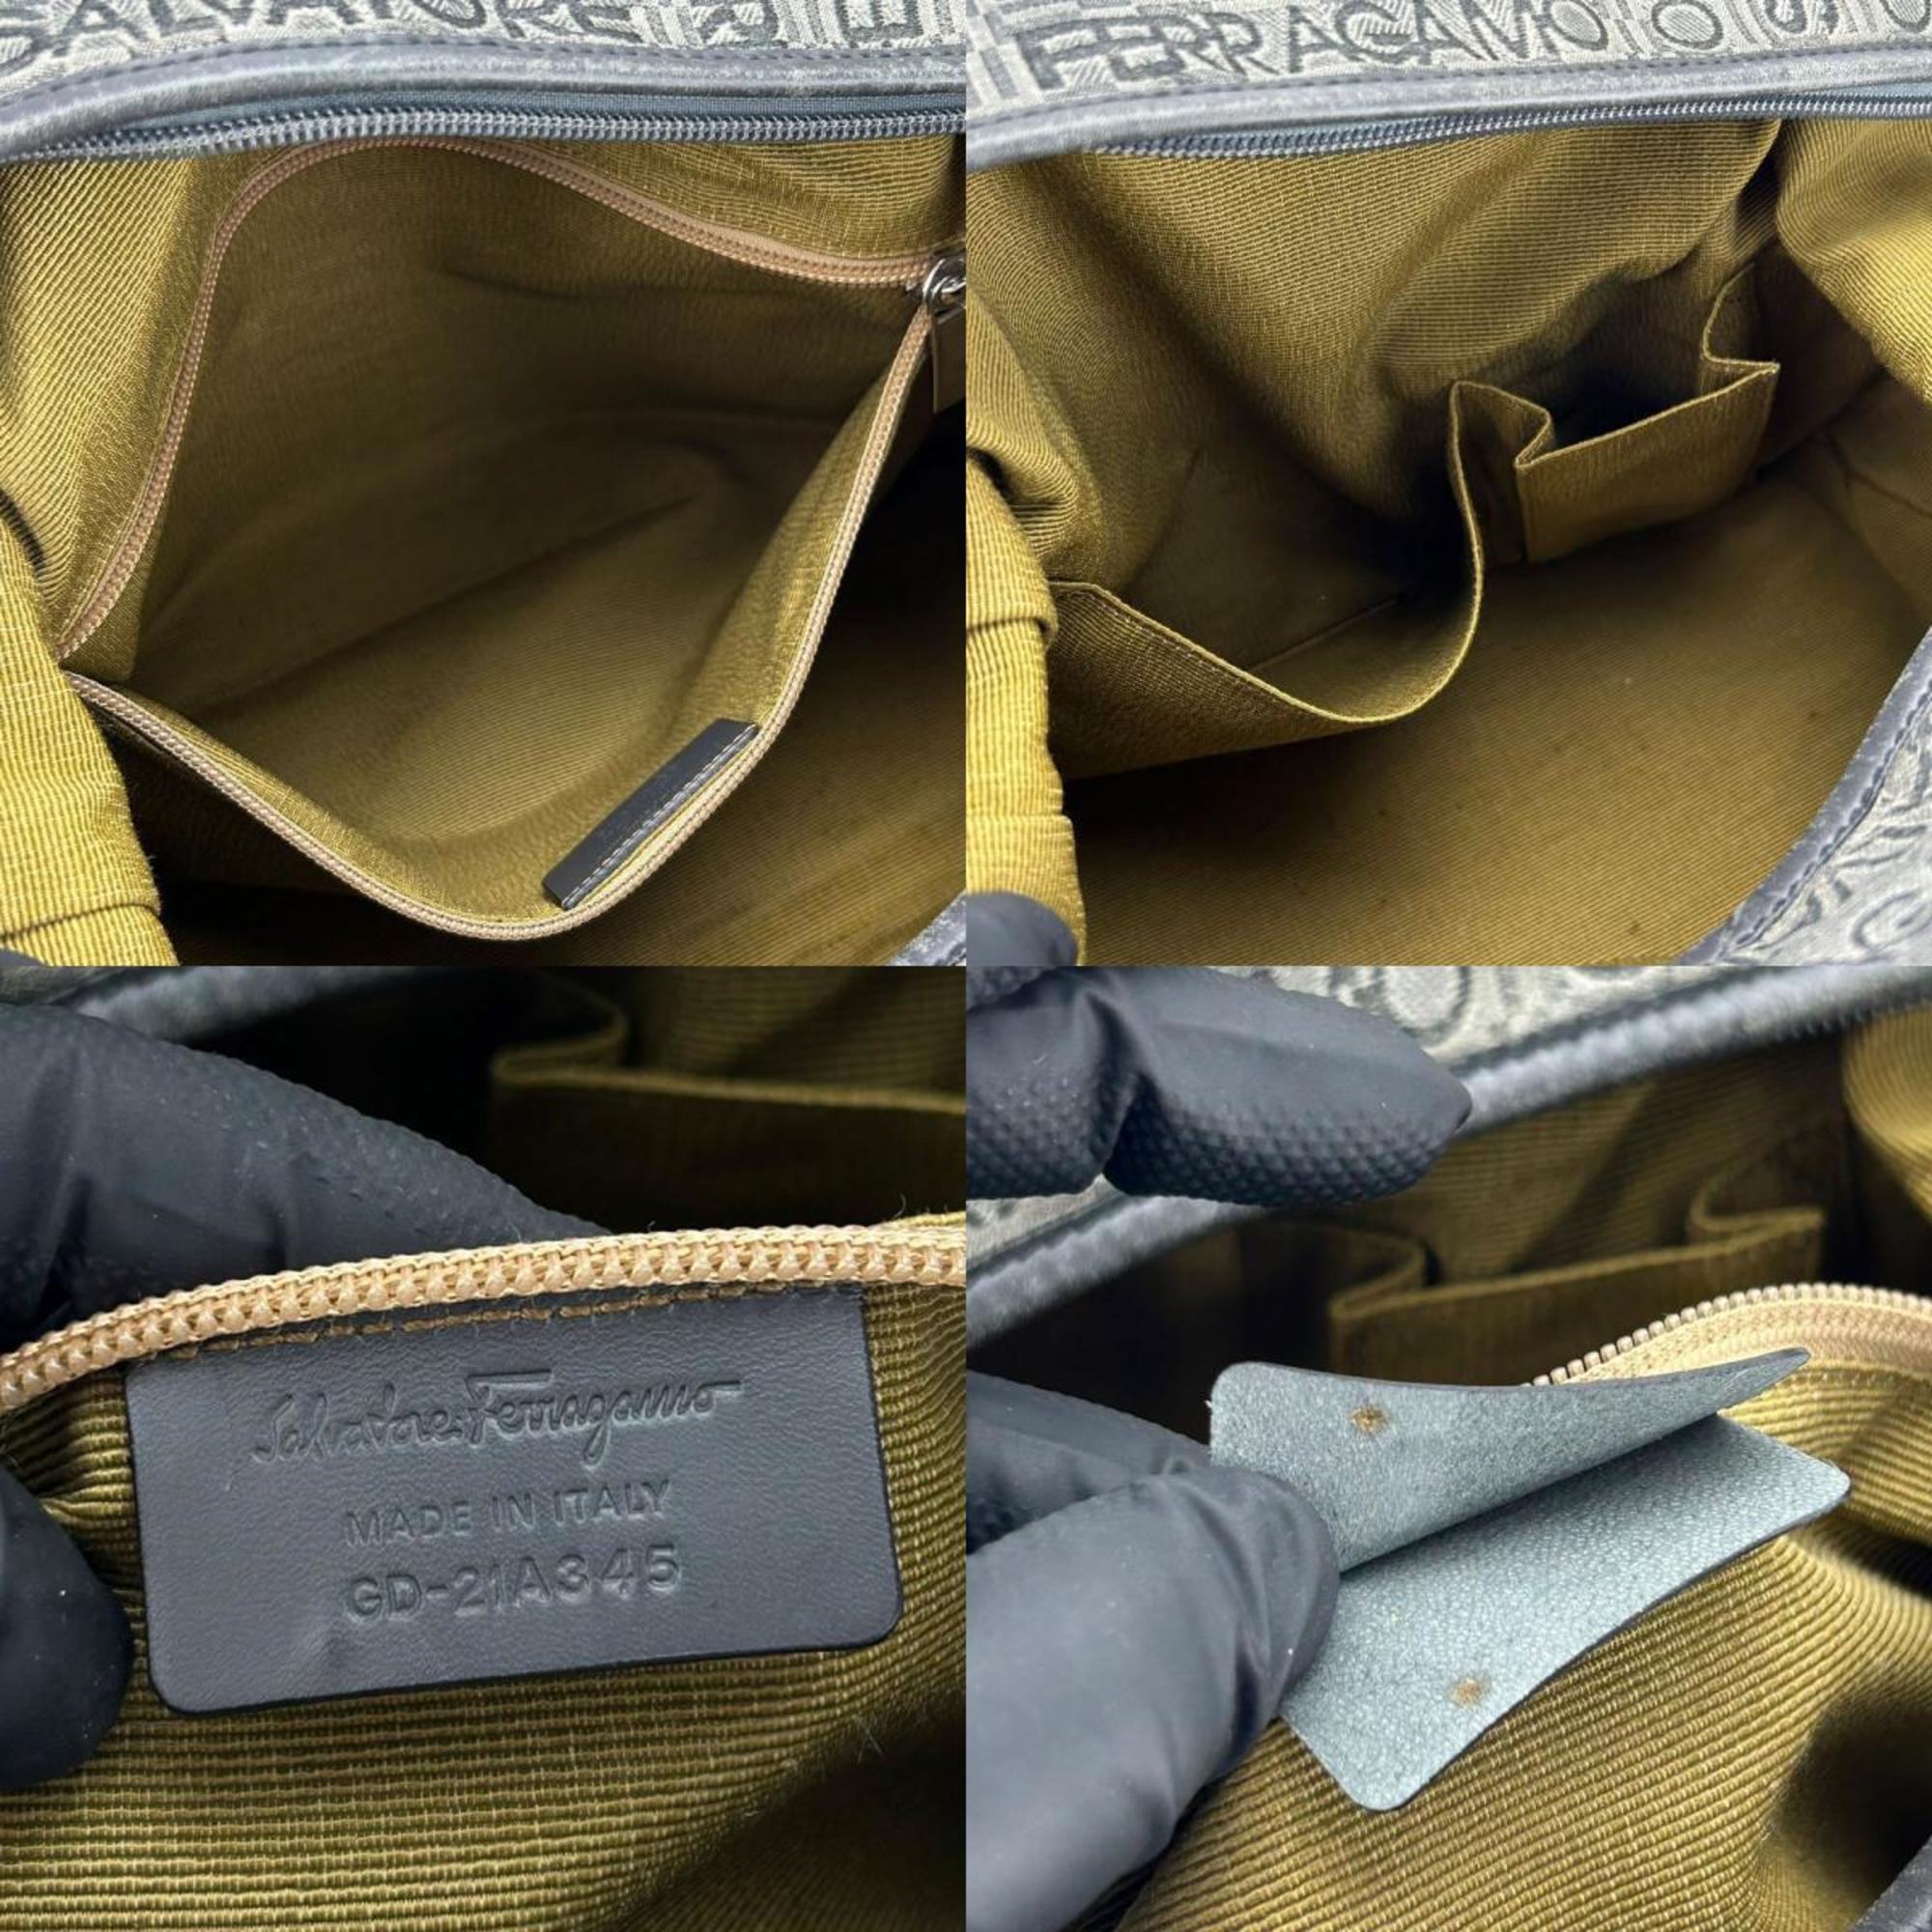 Salvatore Ferragamo Tote Bag GD-21A345 Canvas Leather Grey Women's